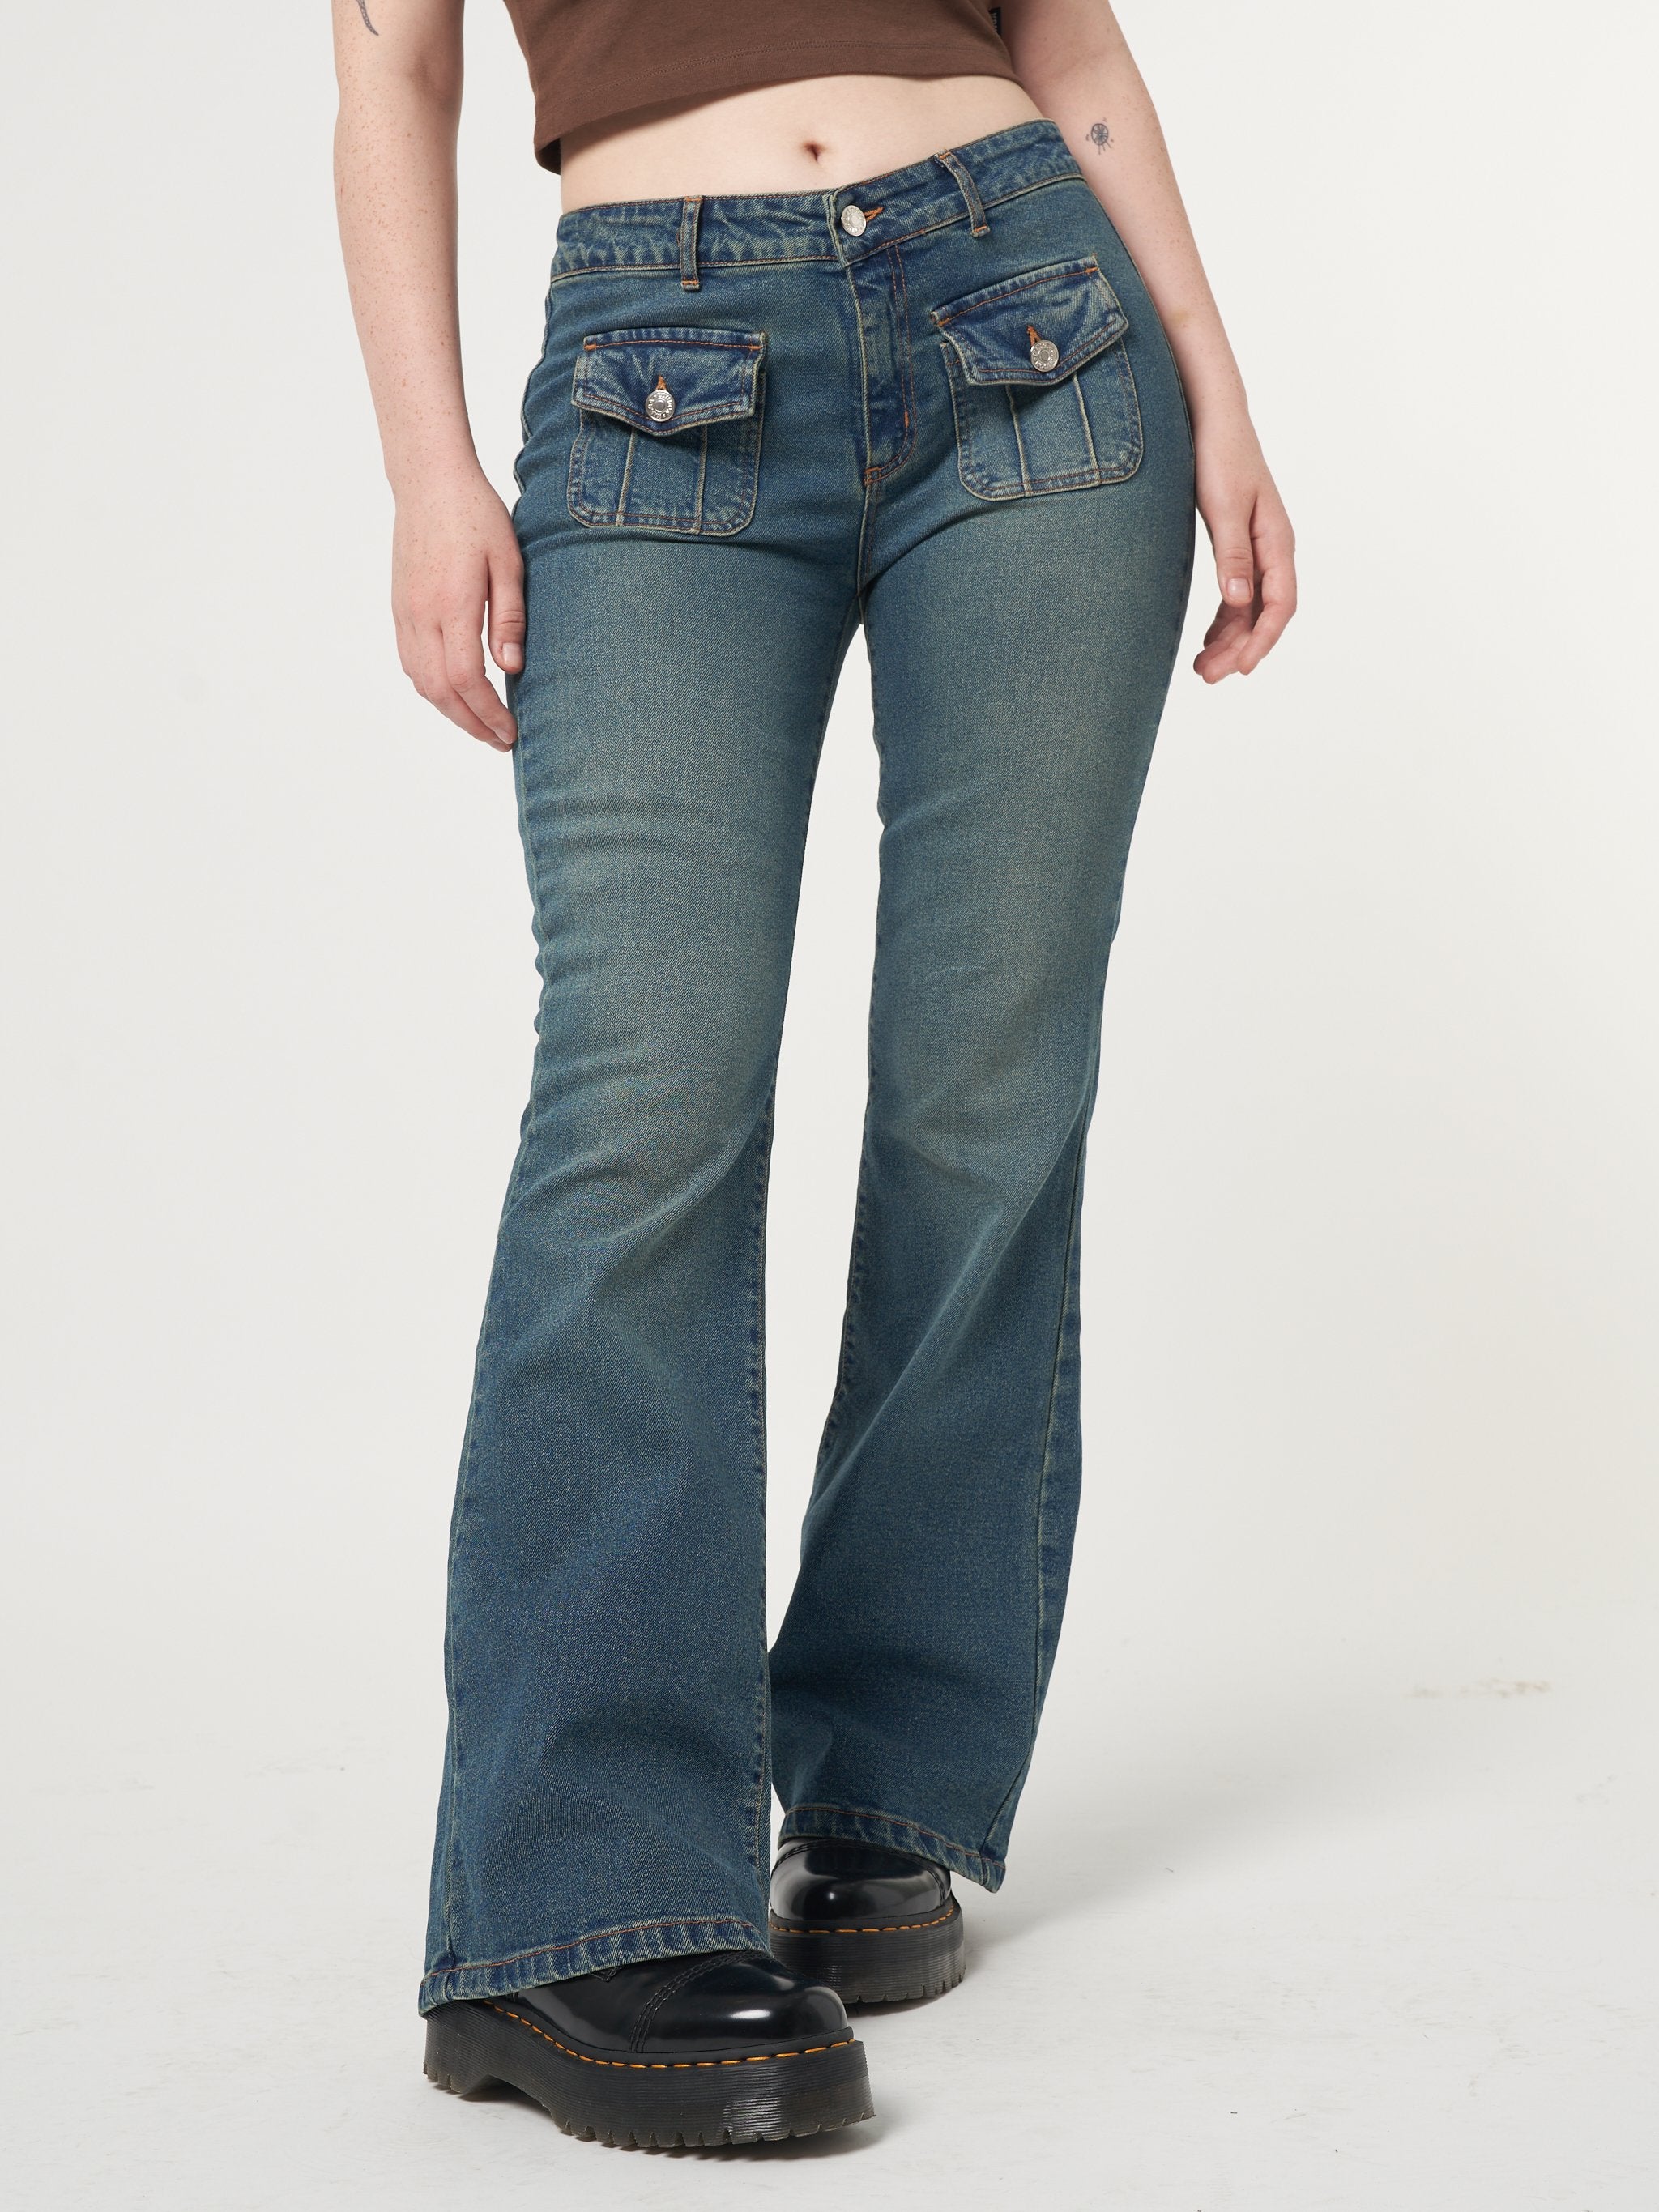 Jade Overdye Front Pocket Flare Jeans